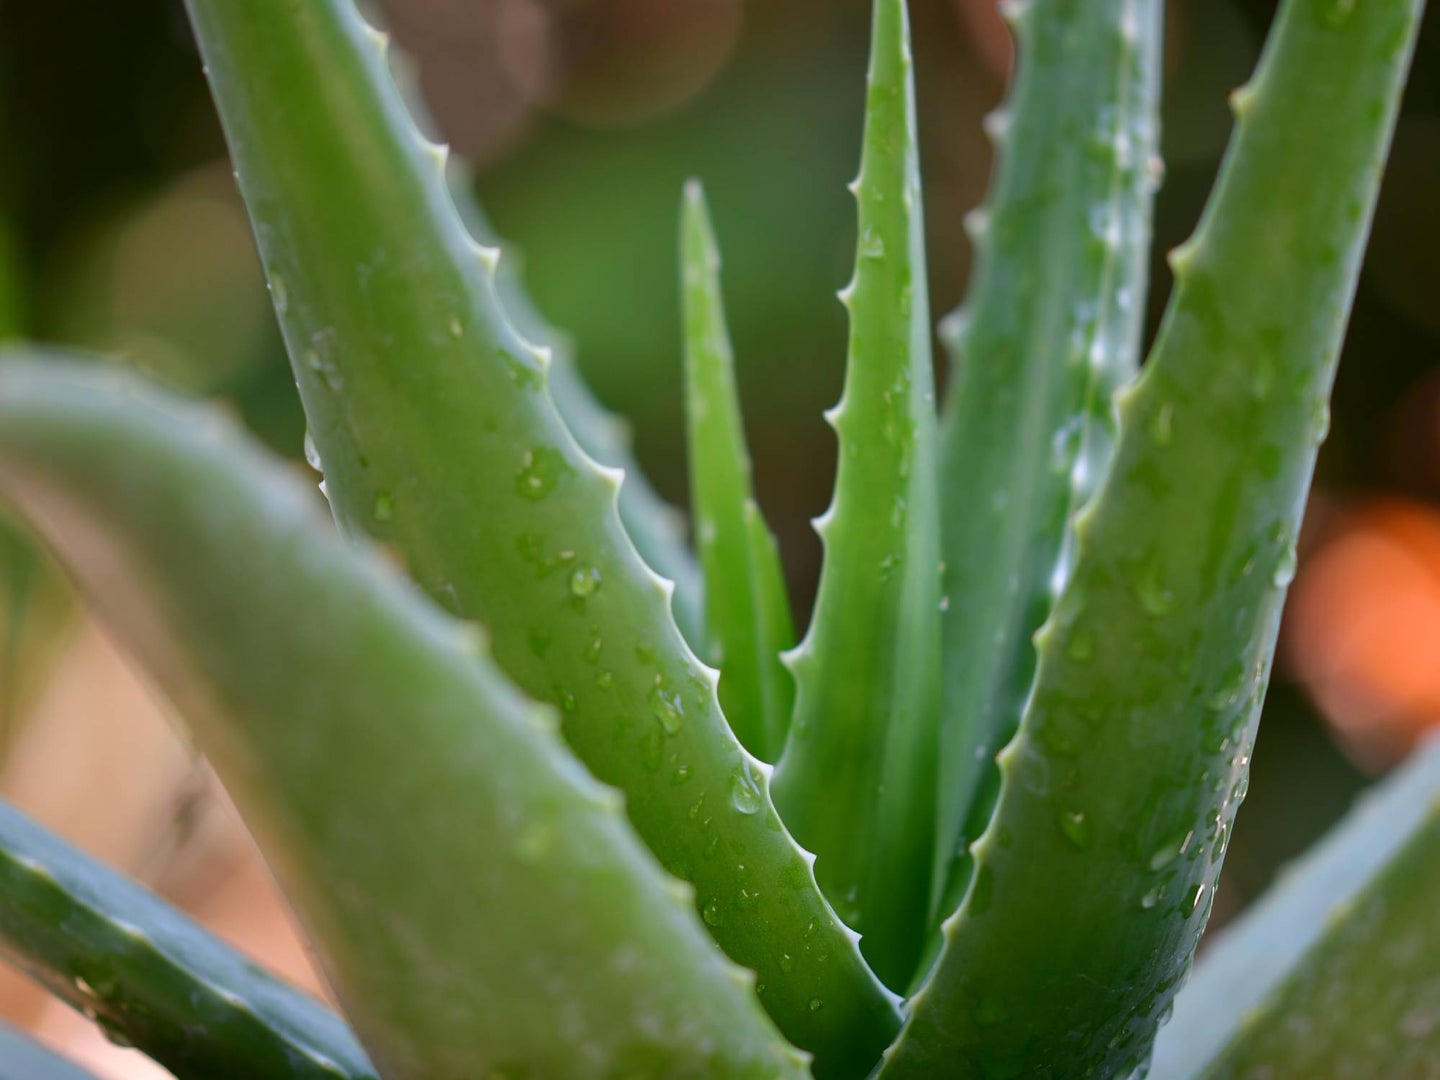 Close up to aloe vera plant